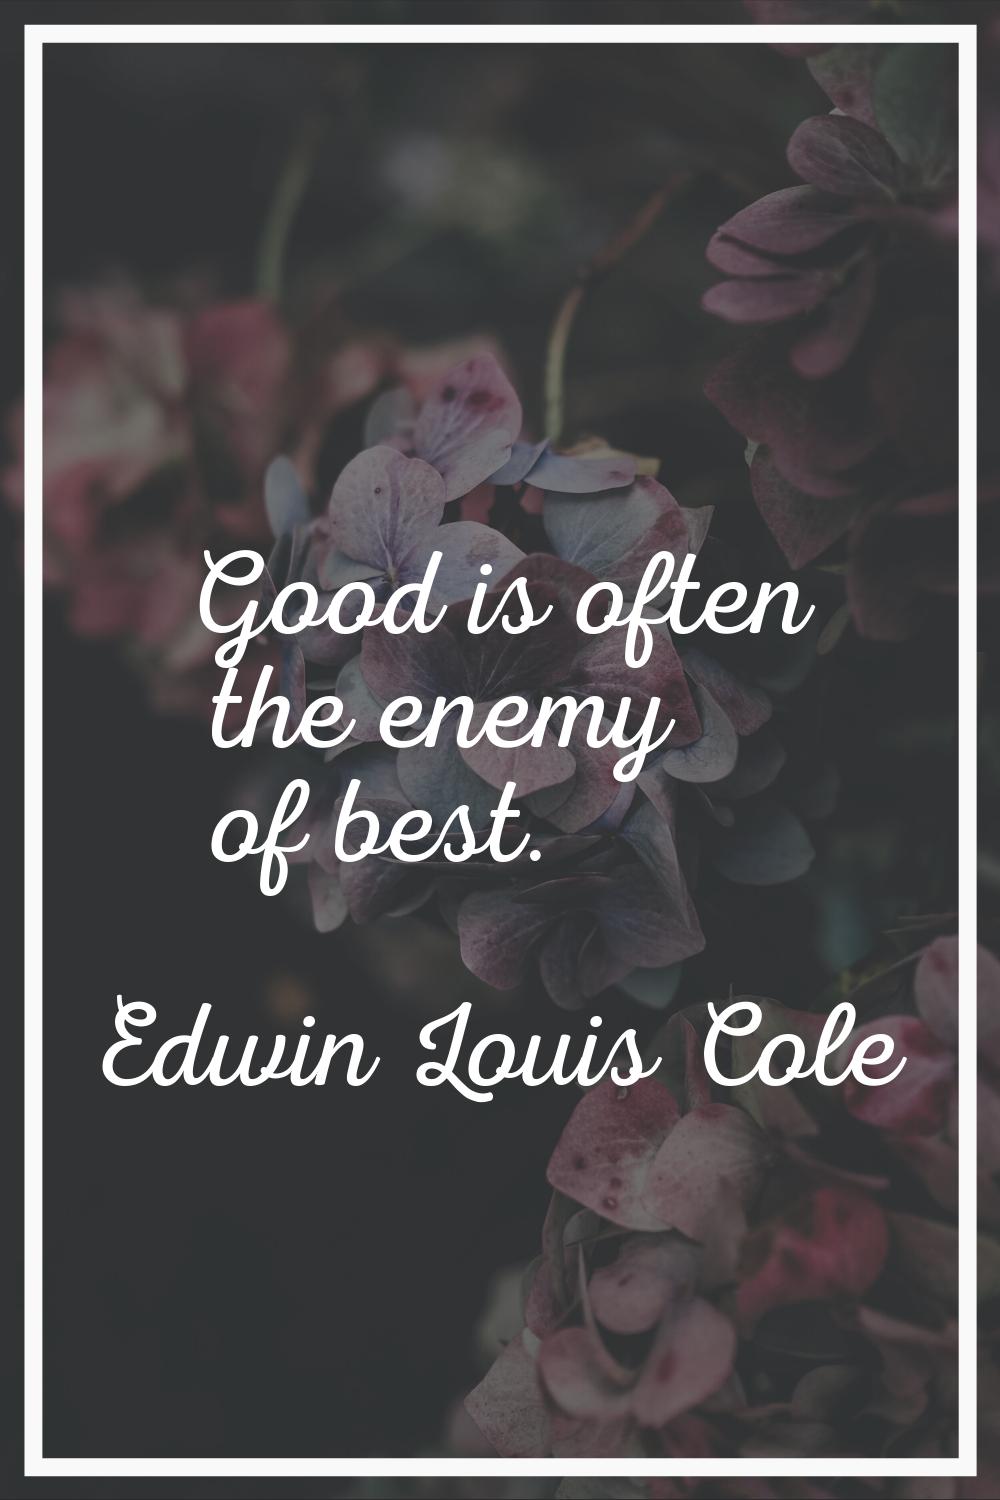 Good is often the enemy of best.